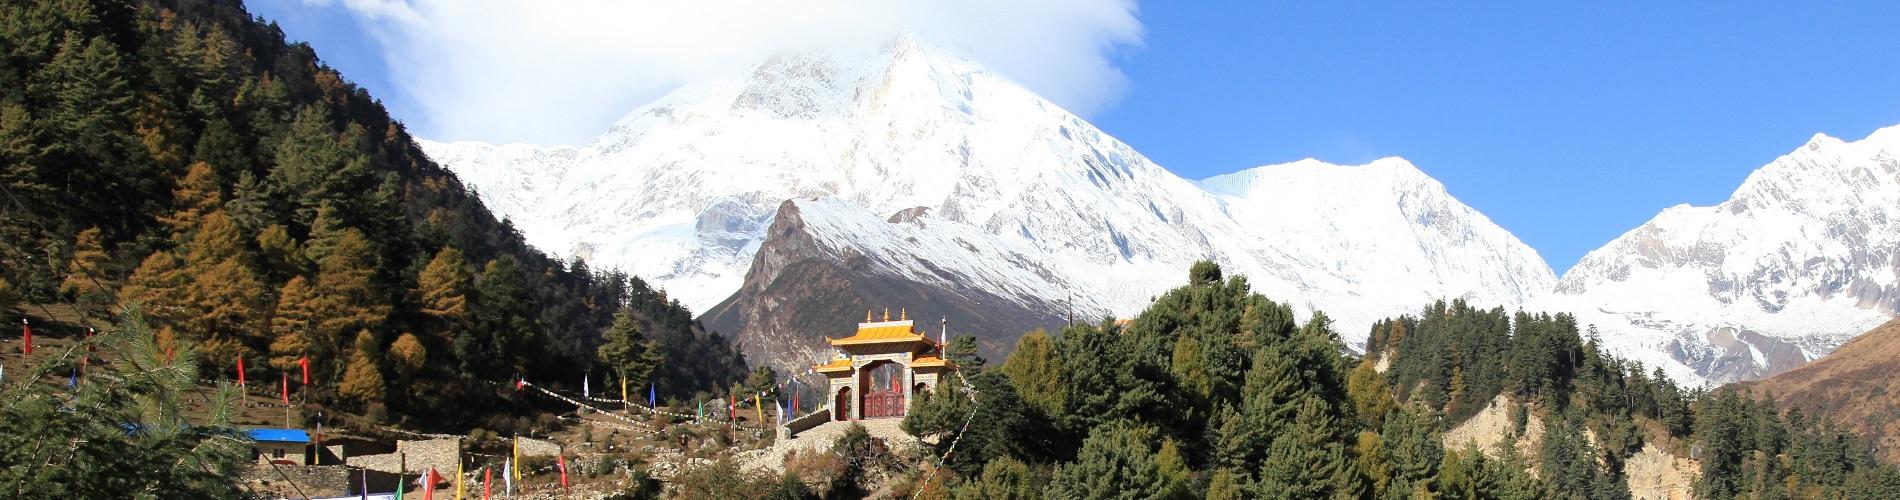 voyages aventure Nepal